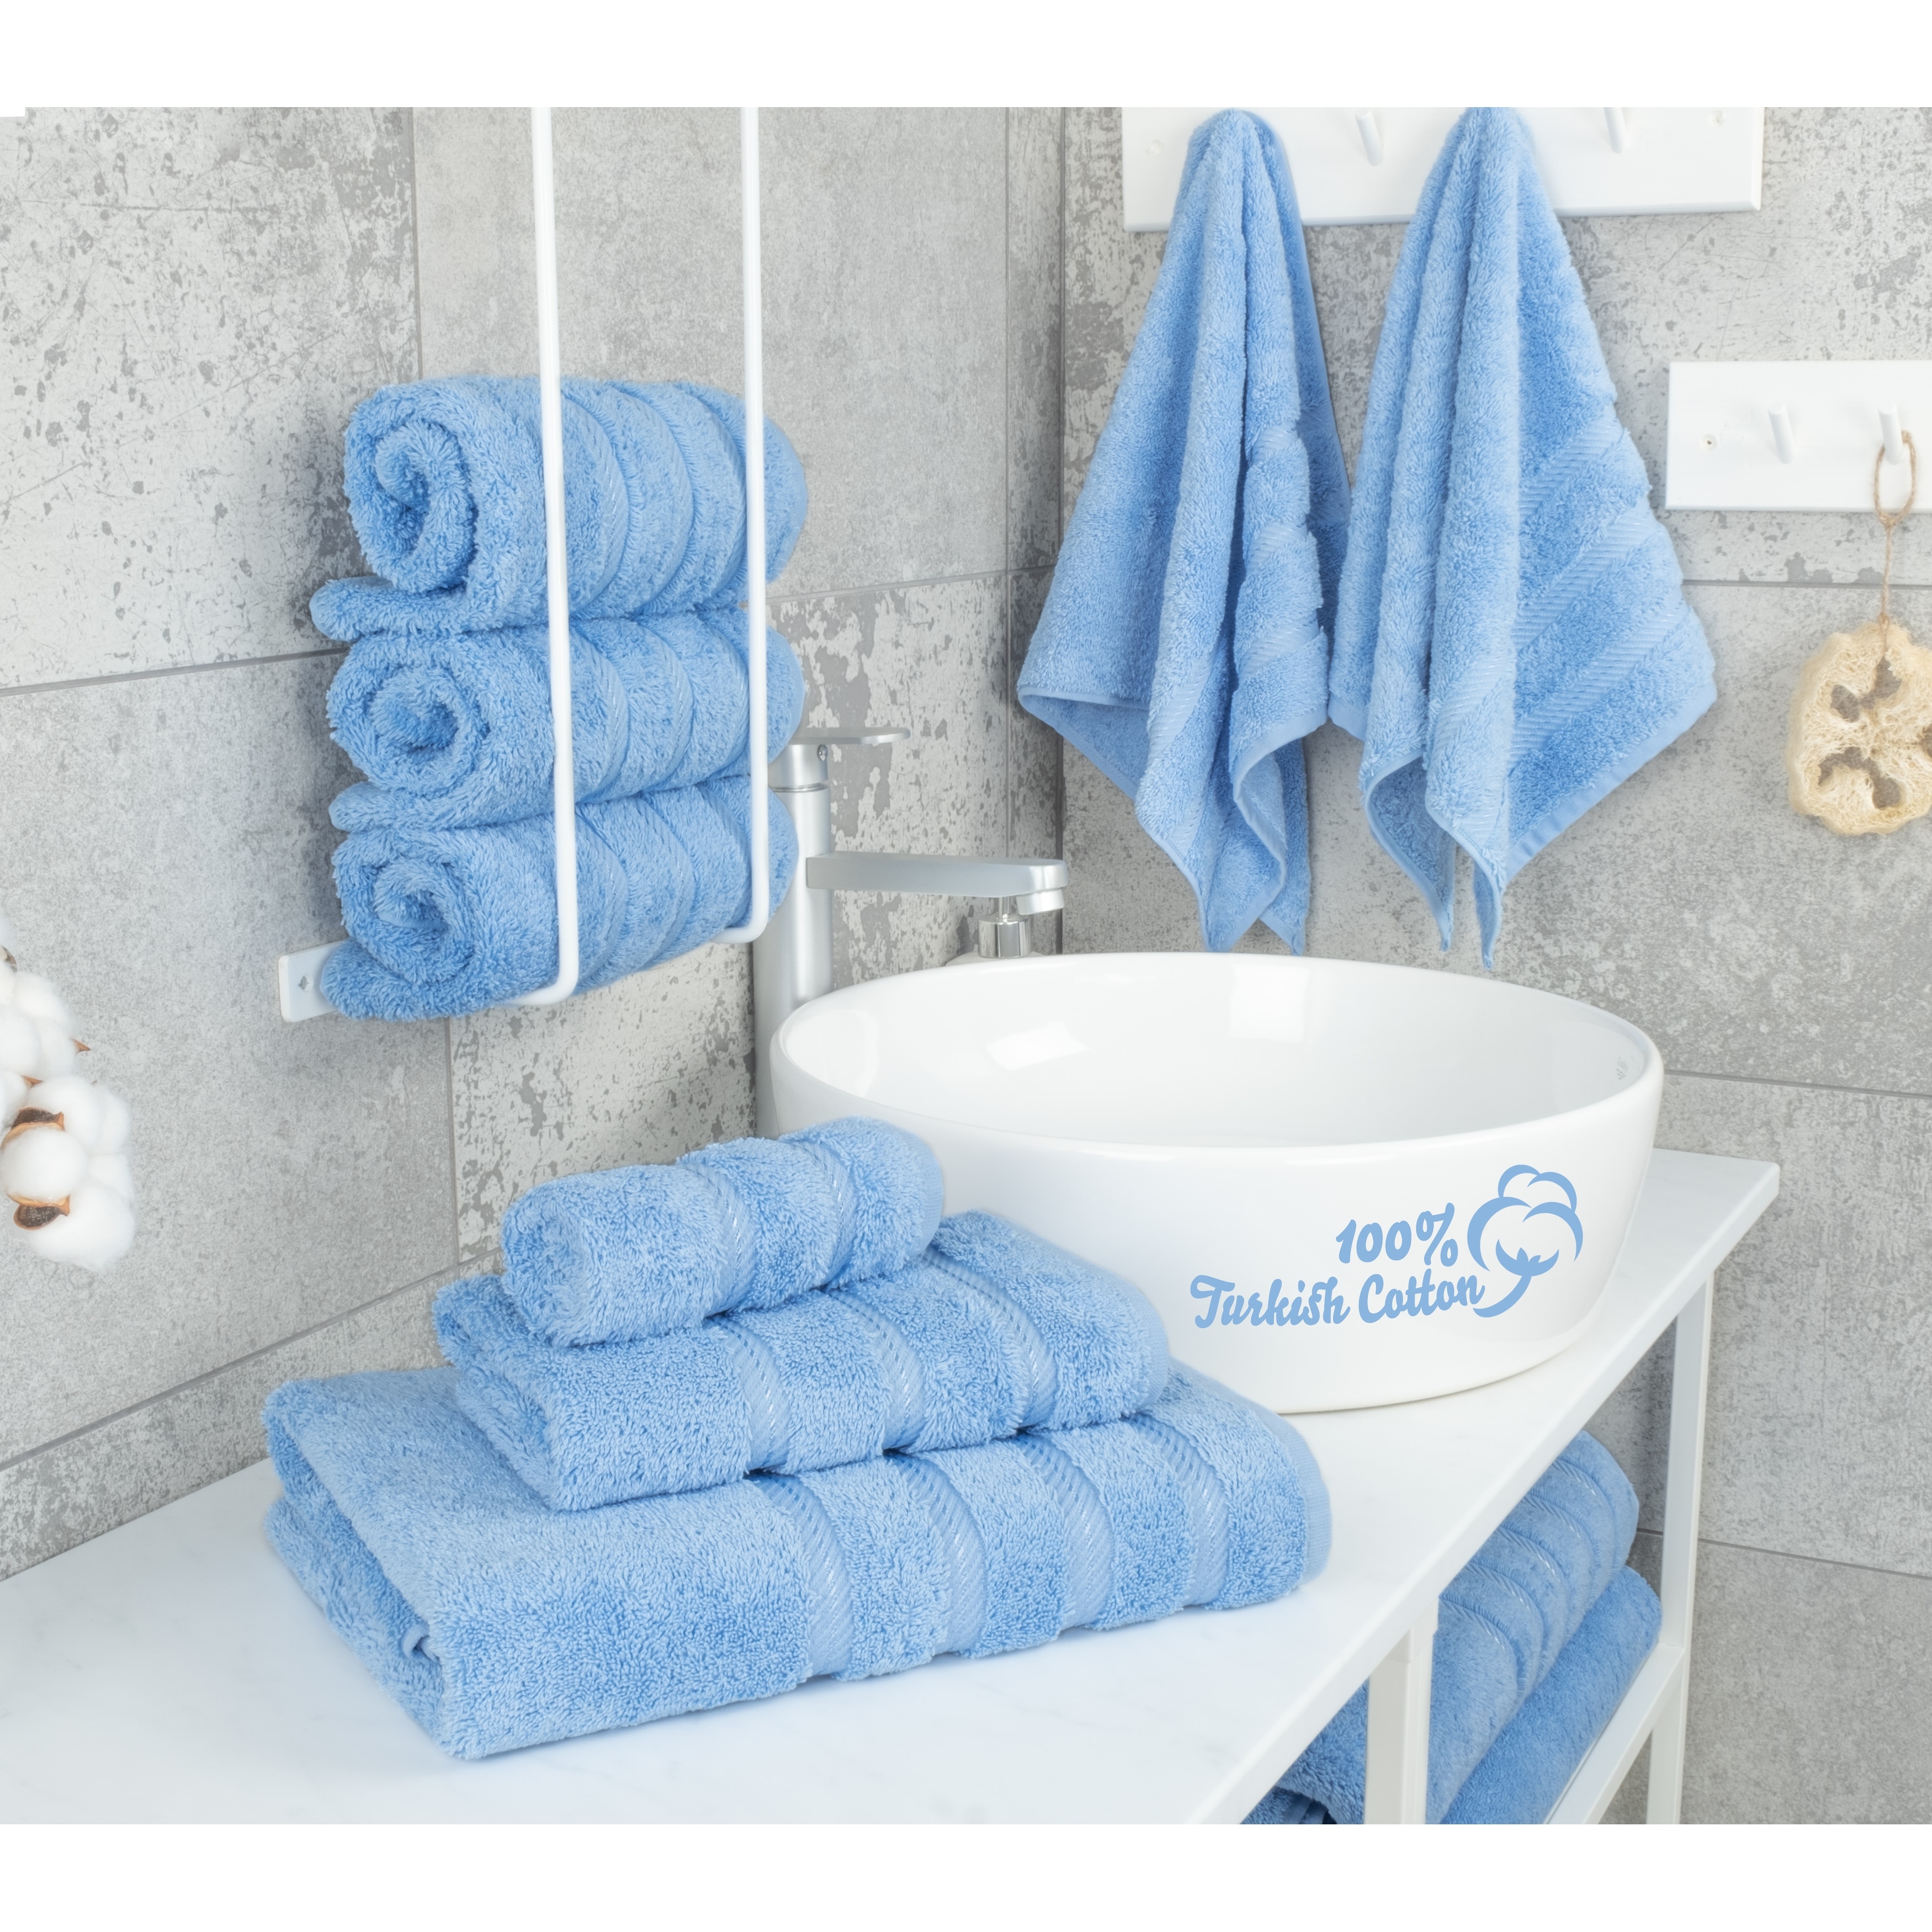 https://ak1.ostkcdn.com/images/products/is/images/direct/50de50e38e6a5c37f6d7b2f729d8e74d840ba4d6/American-Soft-Linen-6-pc.-Turkish-Cotton-Towel-Set.jpg